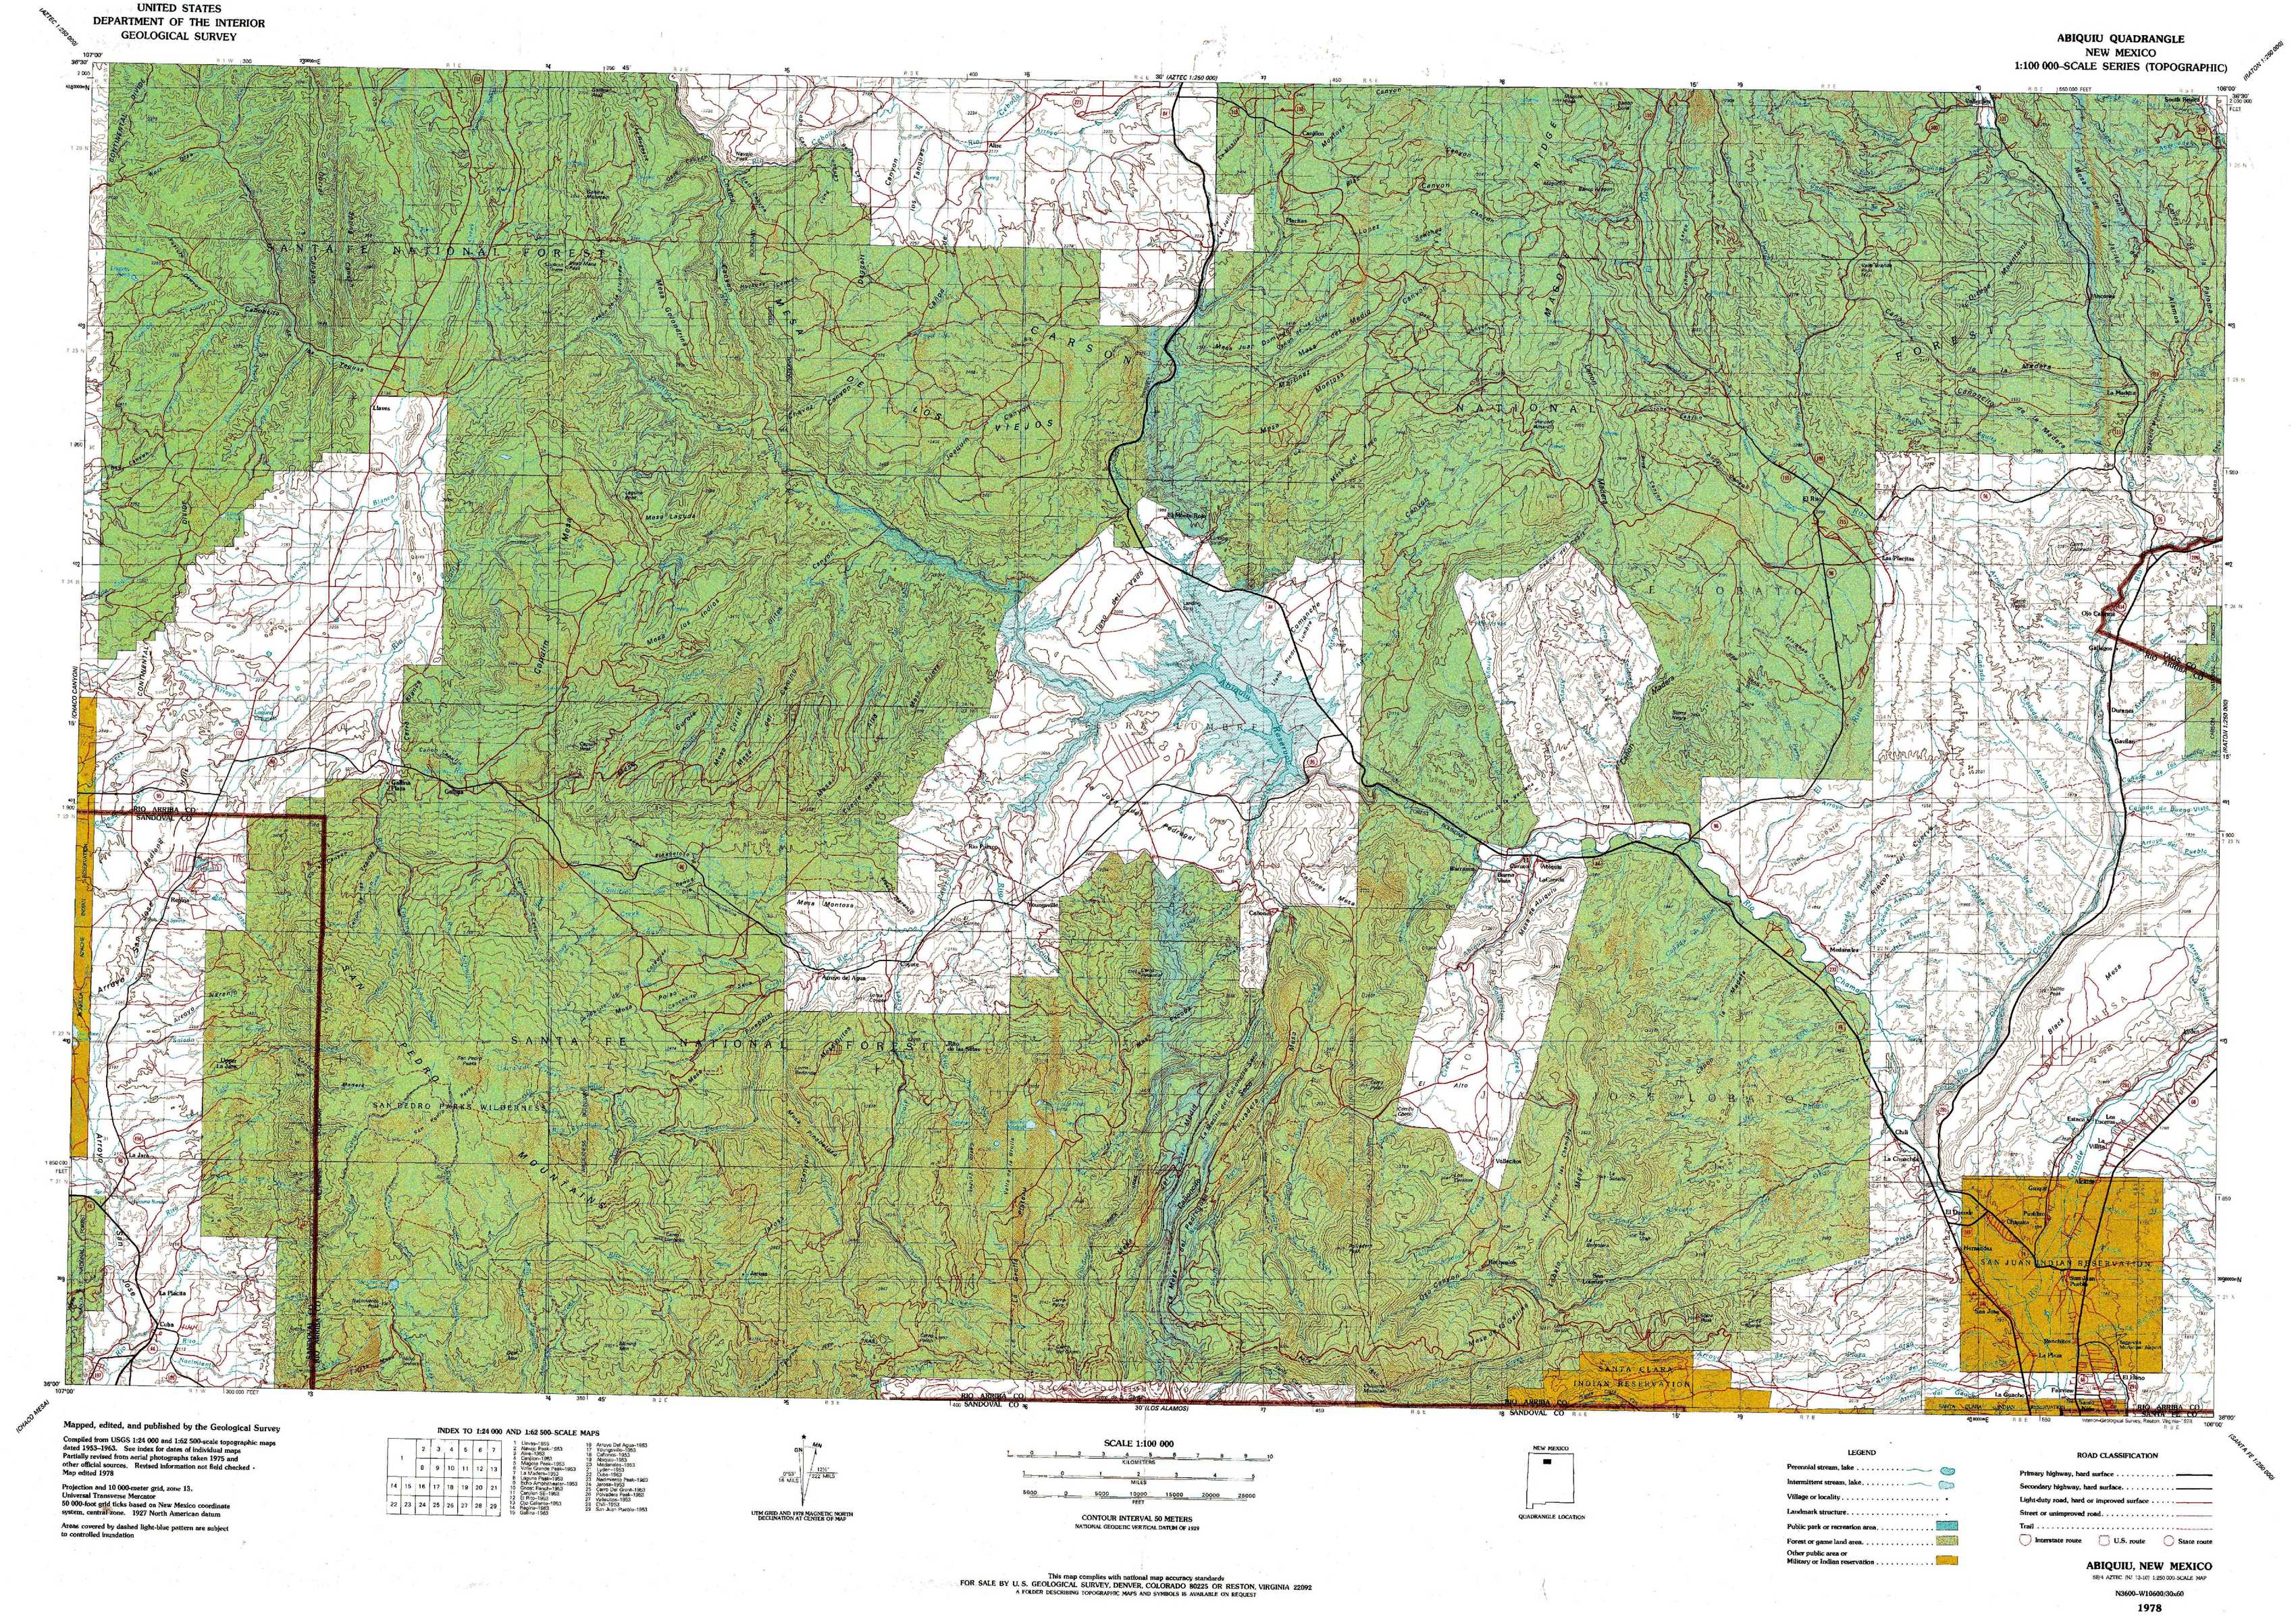 New Mexico USGS Topographic Map NAVAJO RESERVOIR 1980-100K 